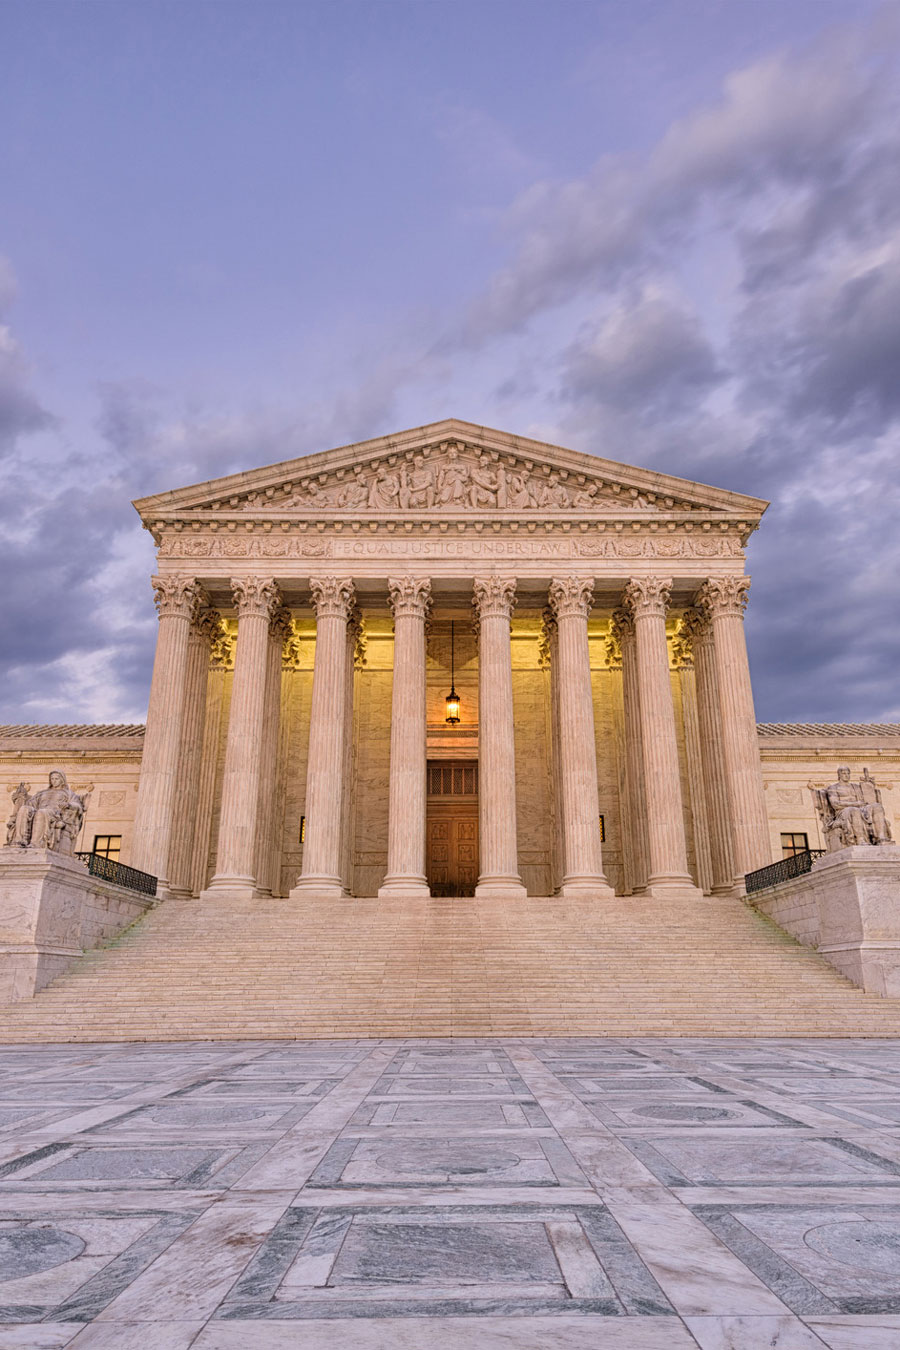 photo - United States Supreme Court Building in Washington DC